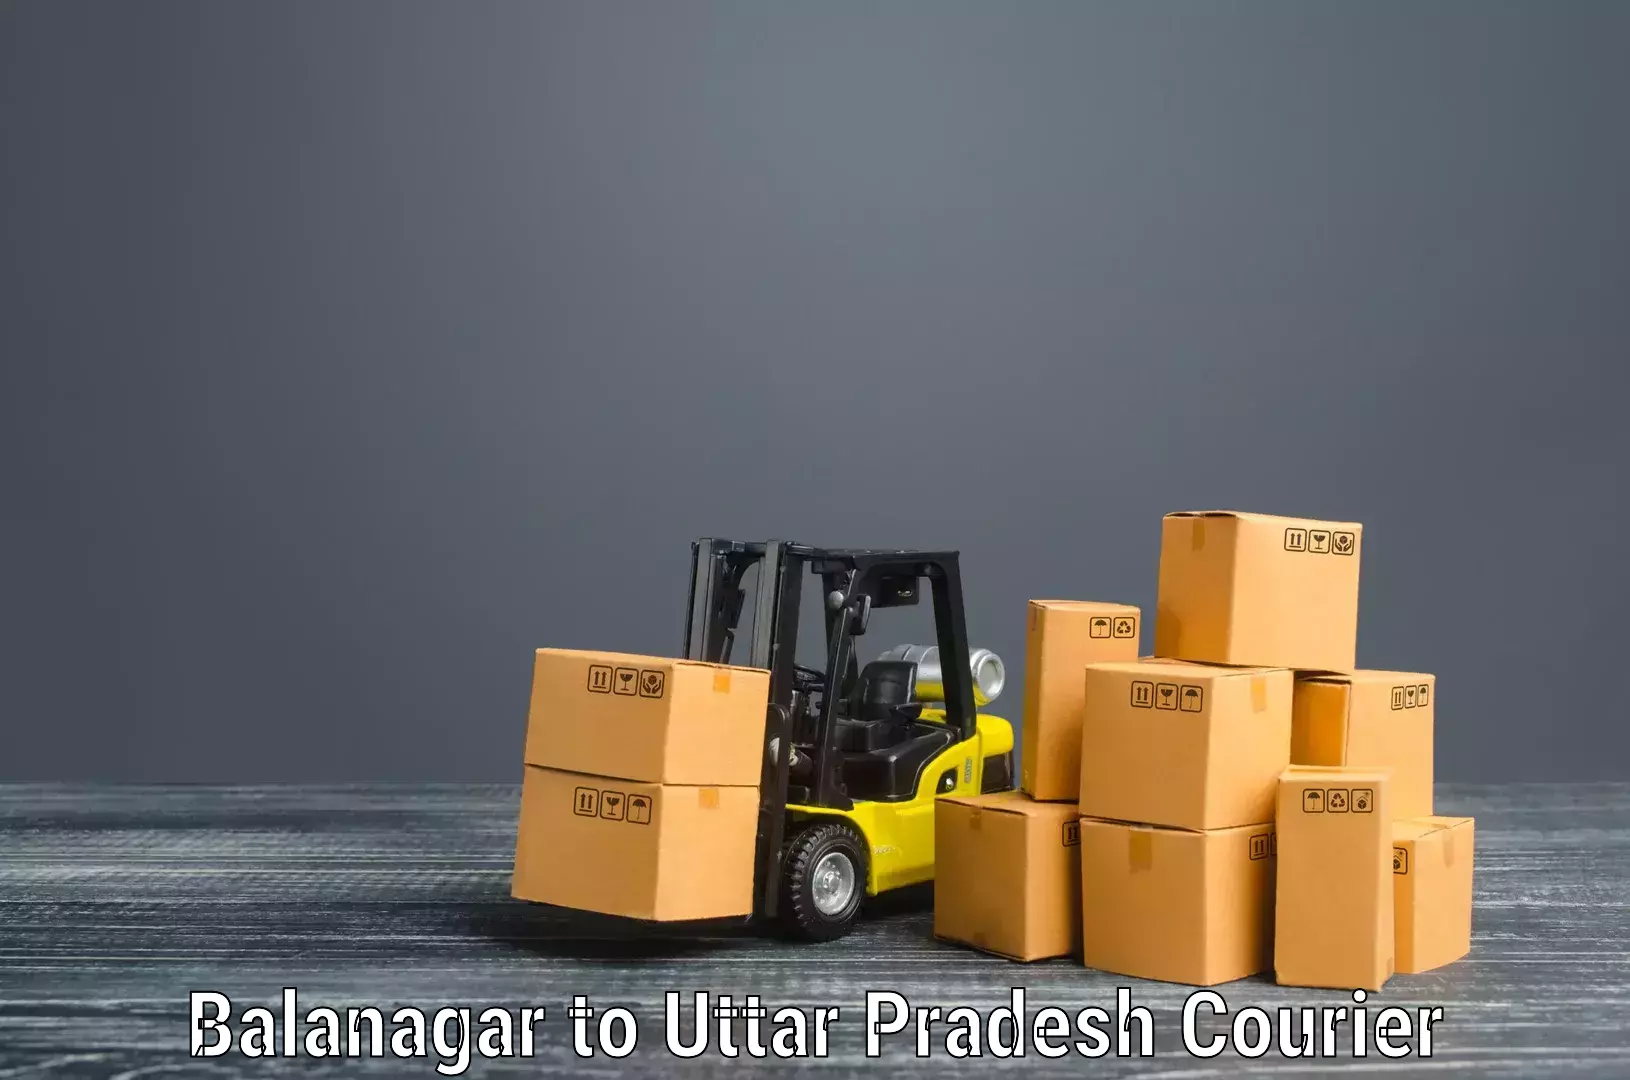 Furniture transport solutions in Balanagar to Allahabad